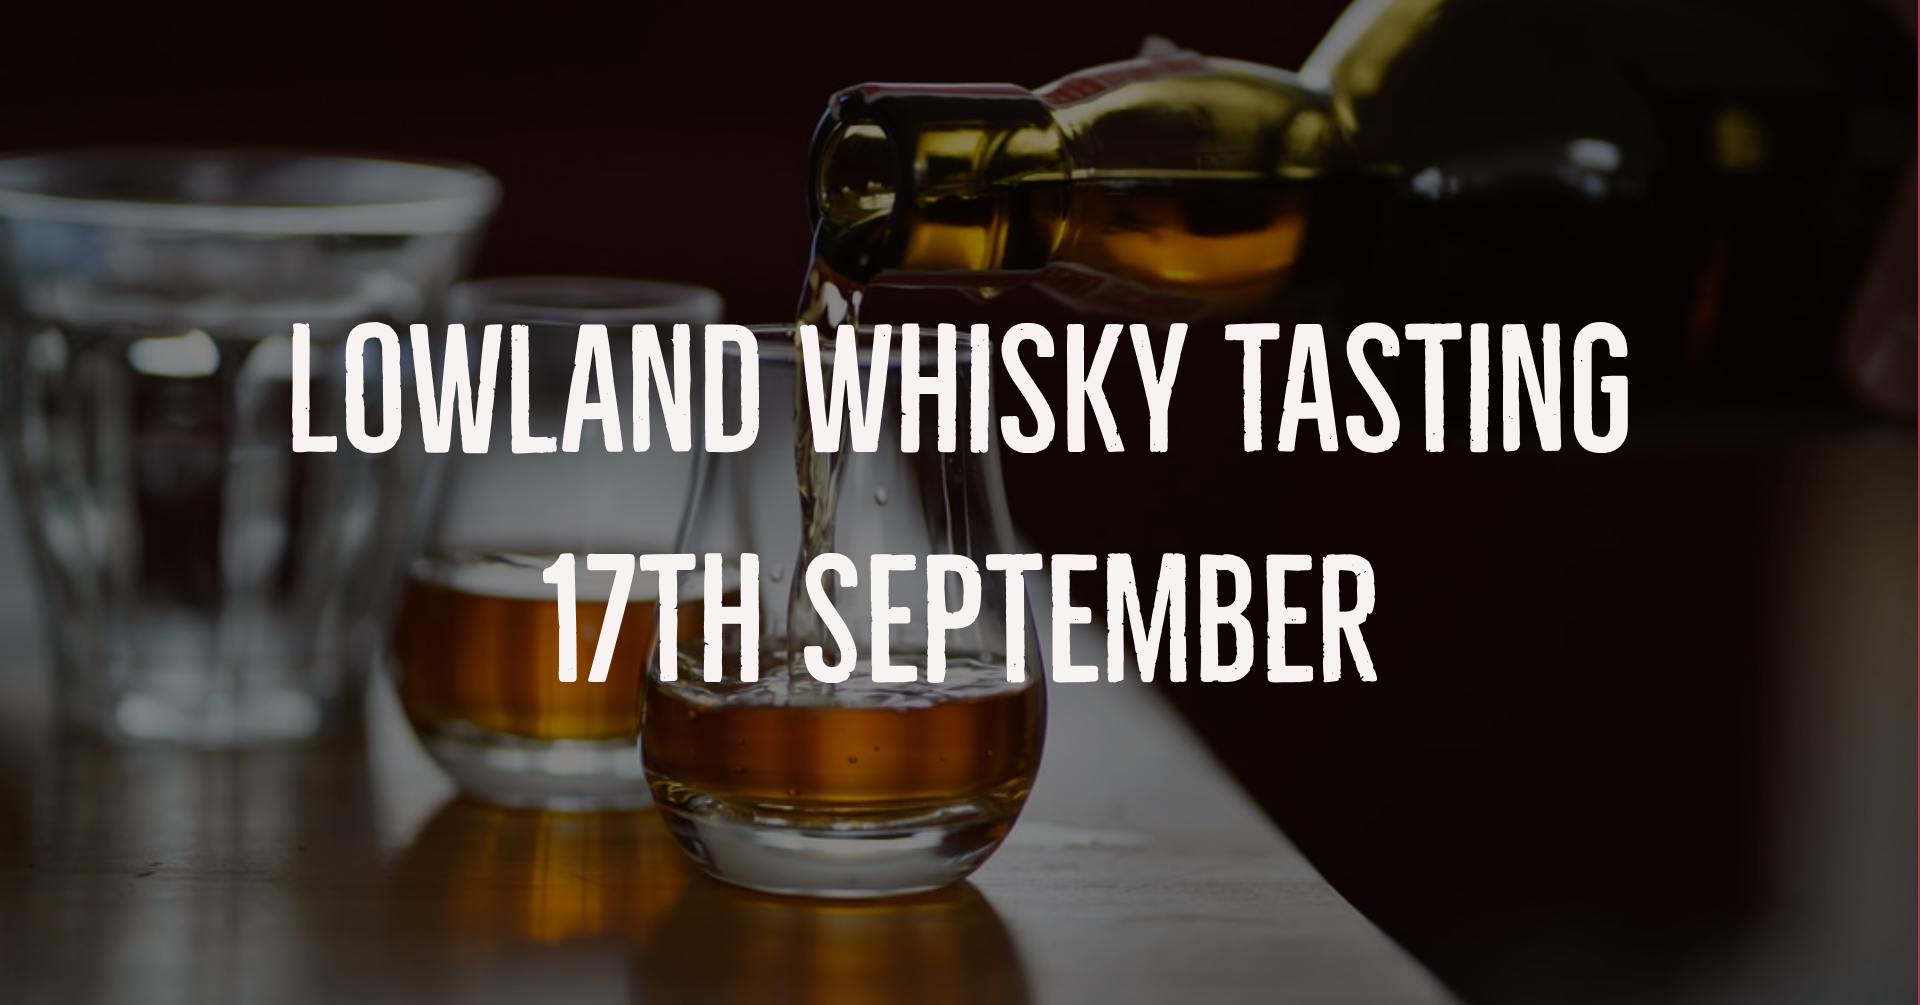 Scotch Whisky Tasting - Lowlands Region